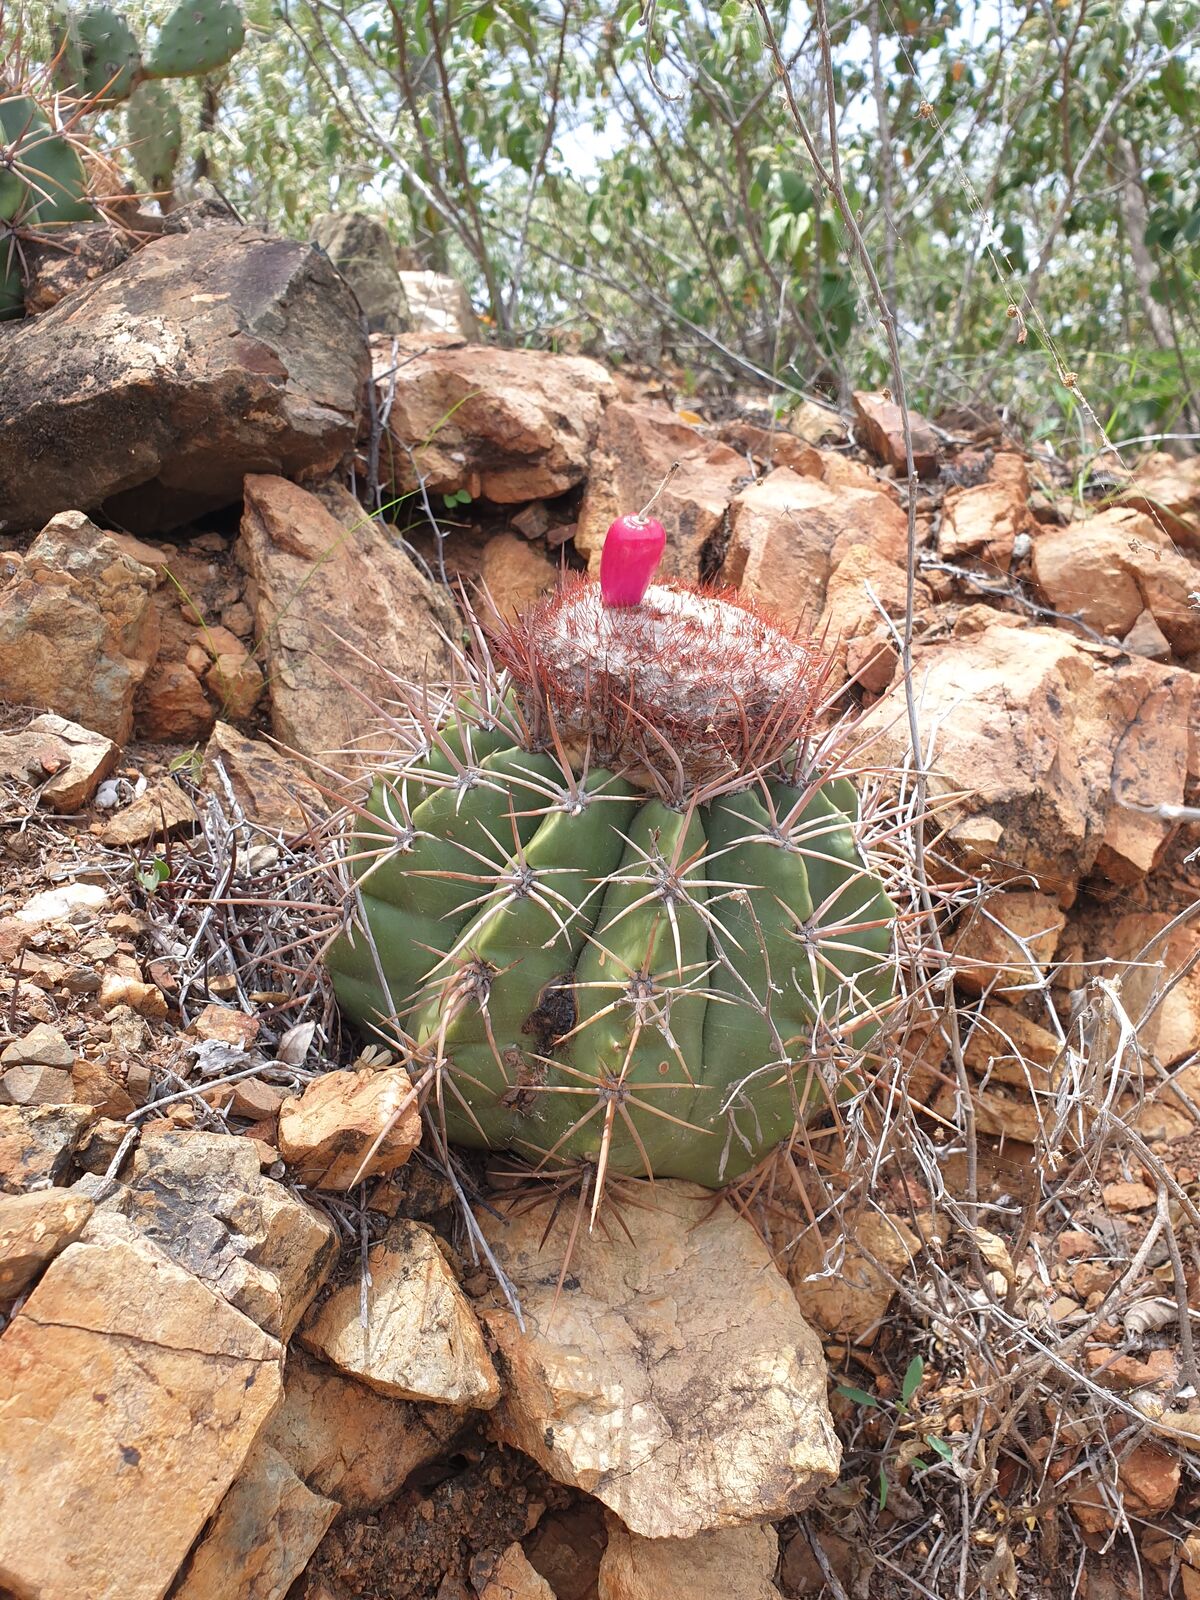 A rare sight: A cactus with its fruit.